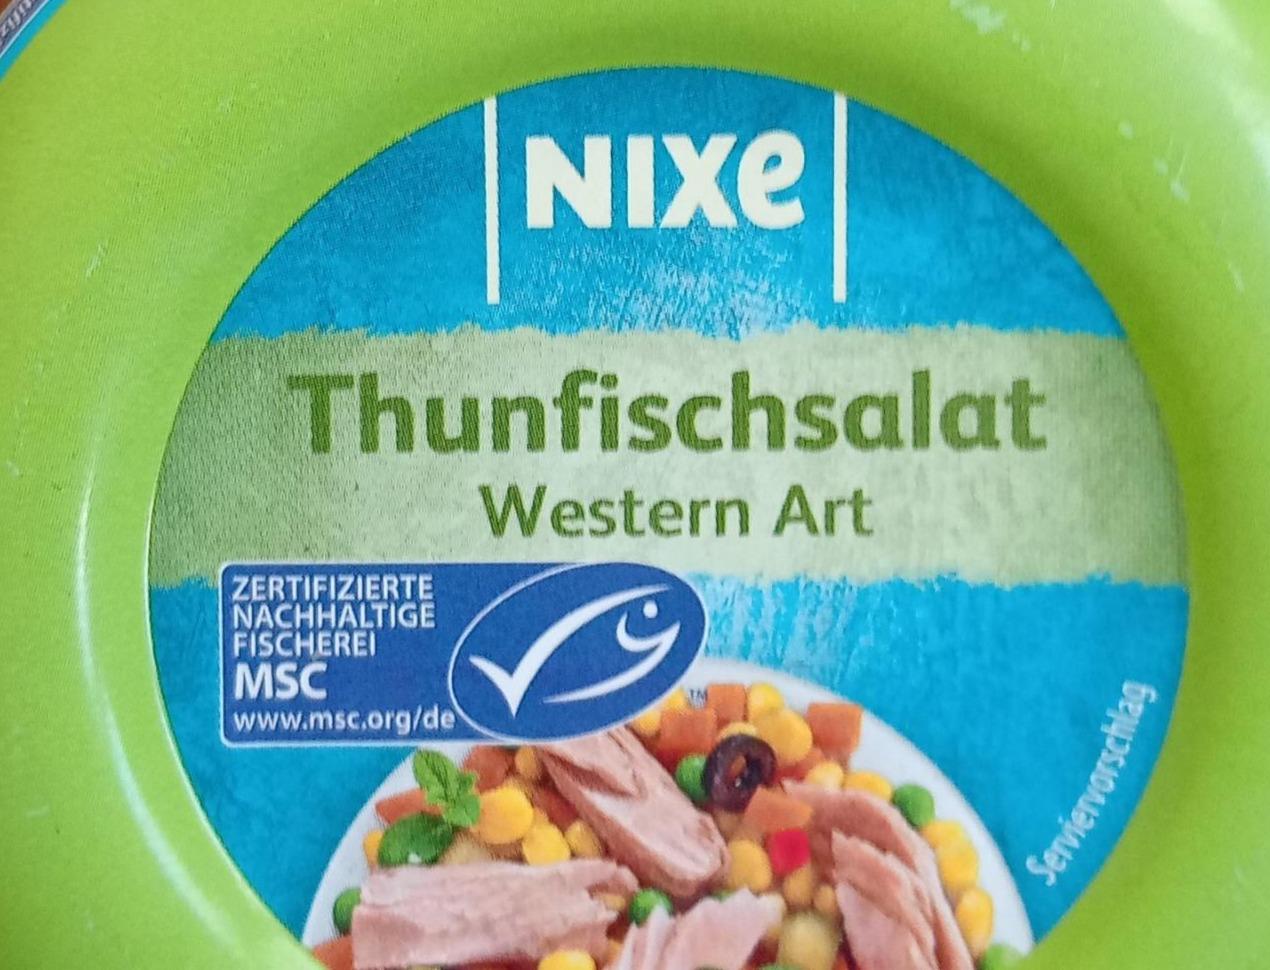 Zdjęcia - Thunfischsalat Western Art Nixe